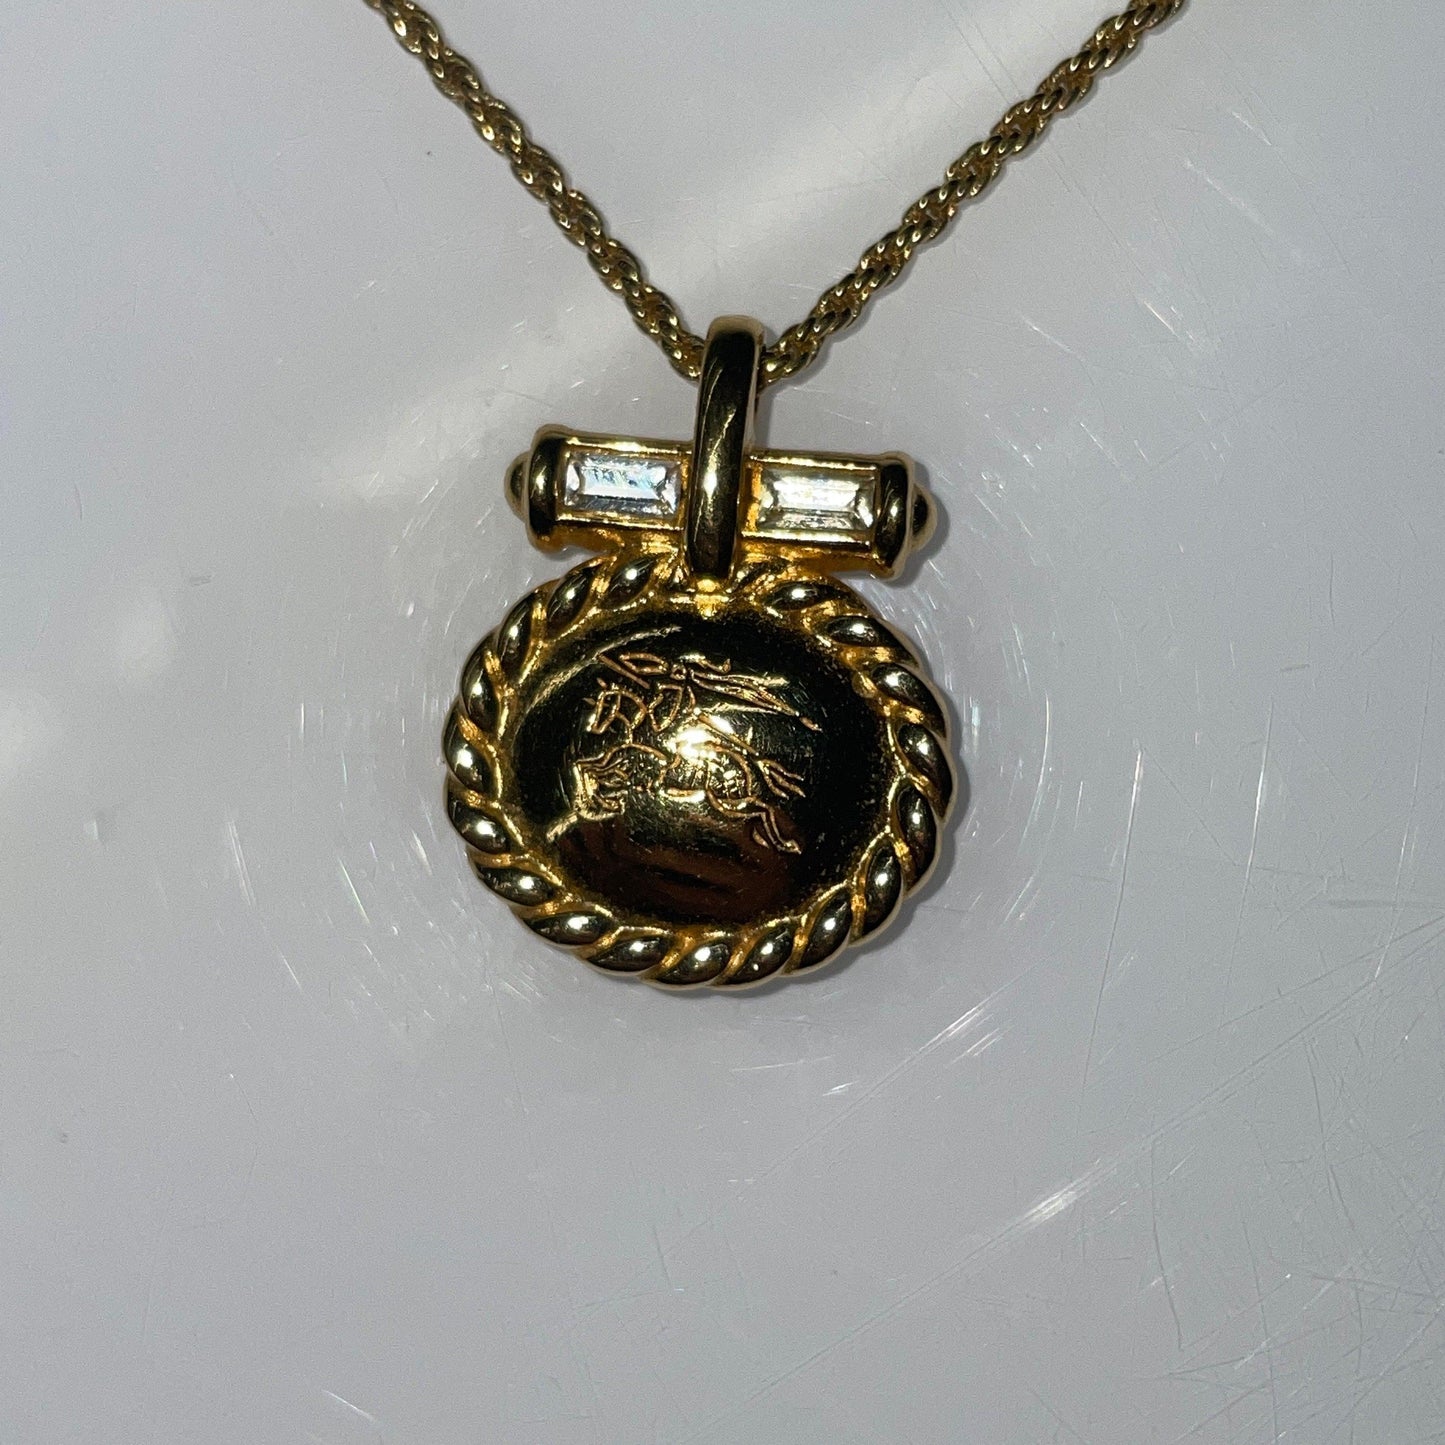 burberrys necklace